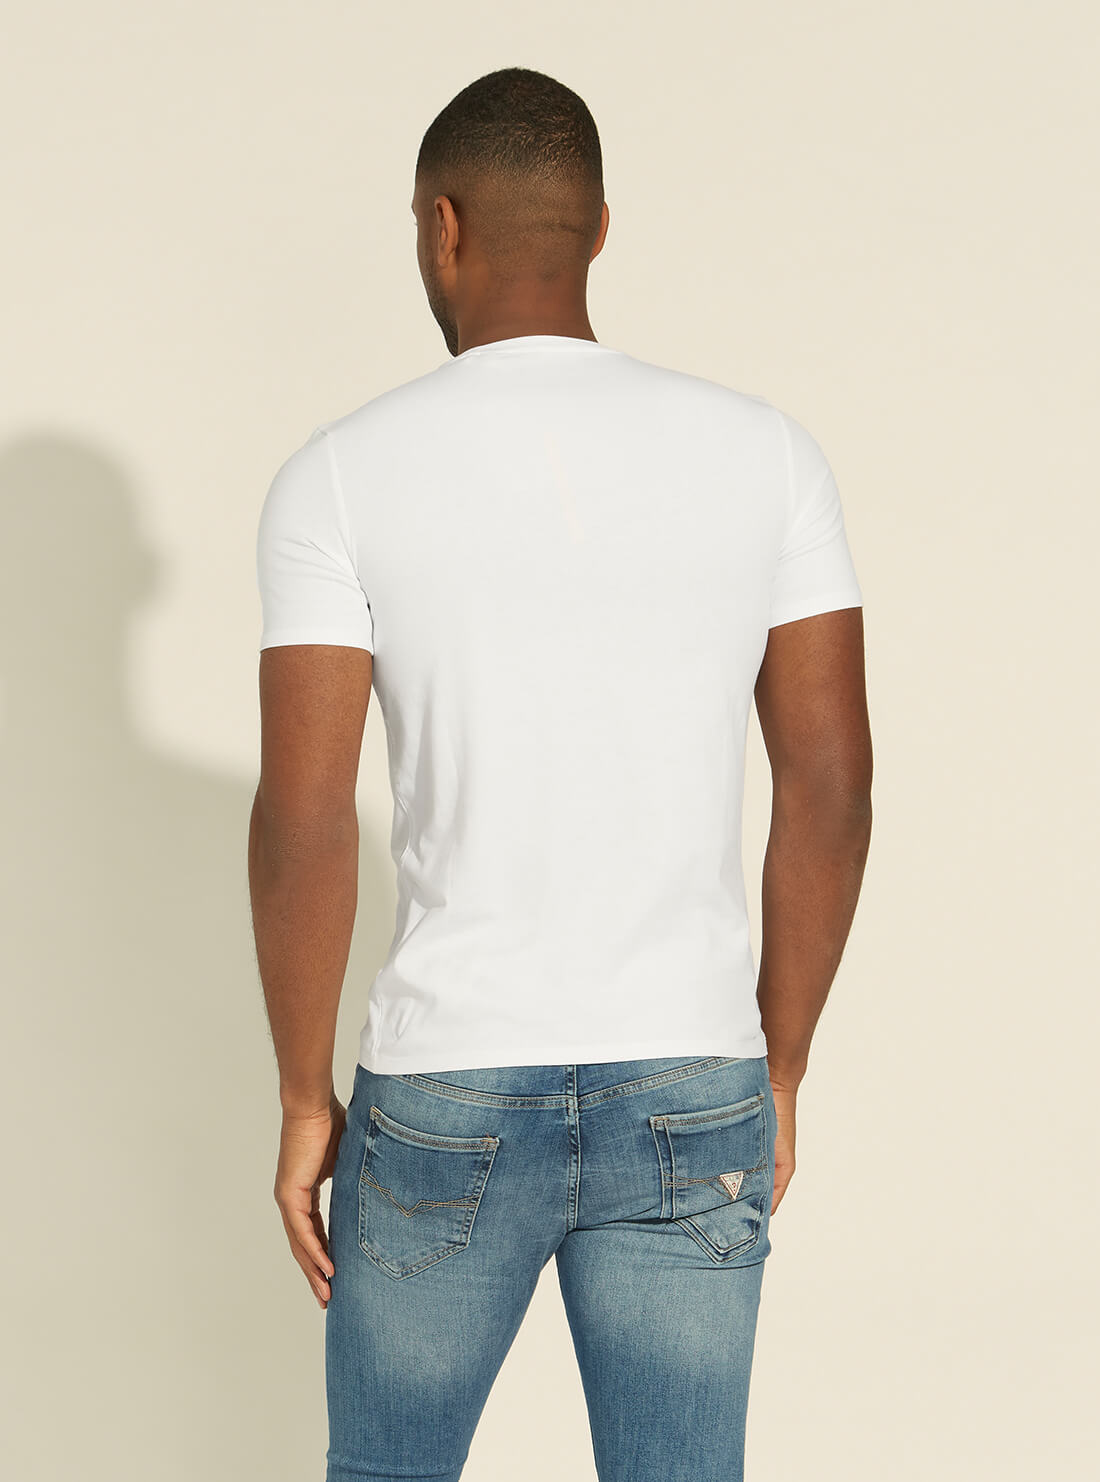 GUESS Mens White Slim Fit Logo T-Shirt M1RI36I3Z11 Back View